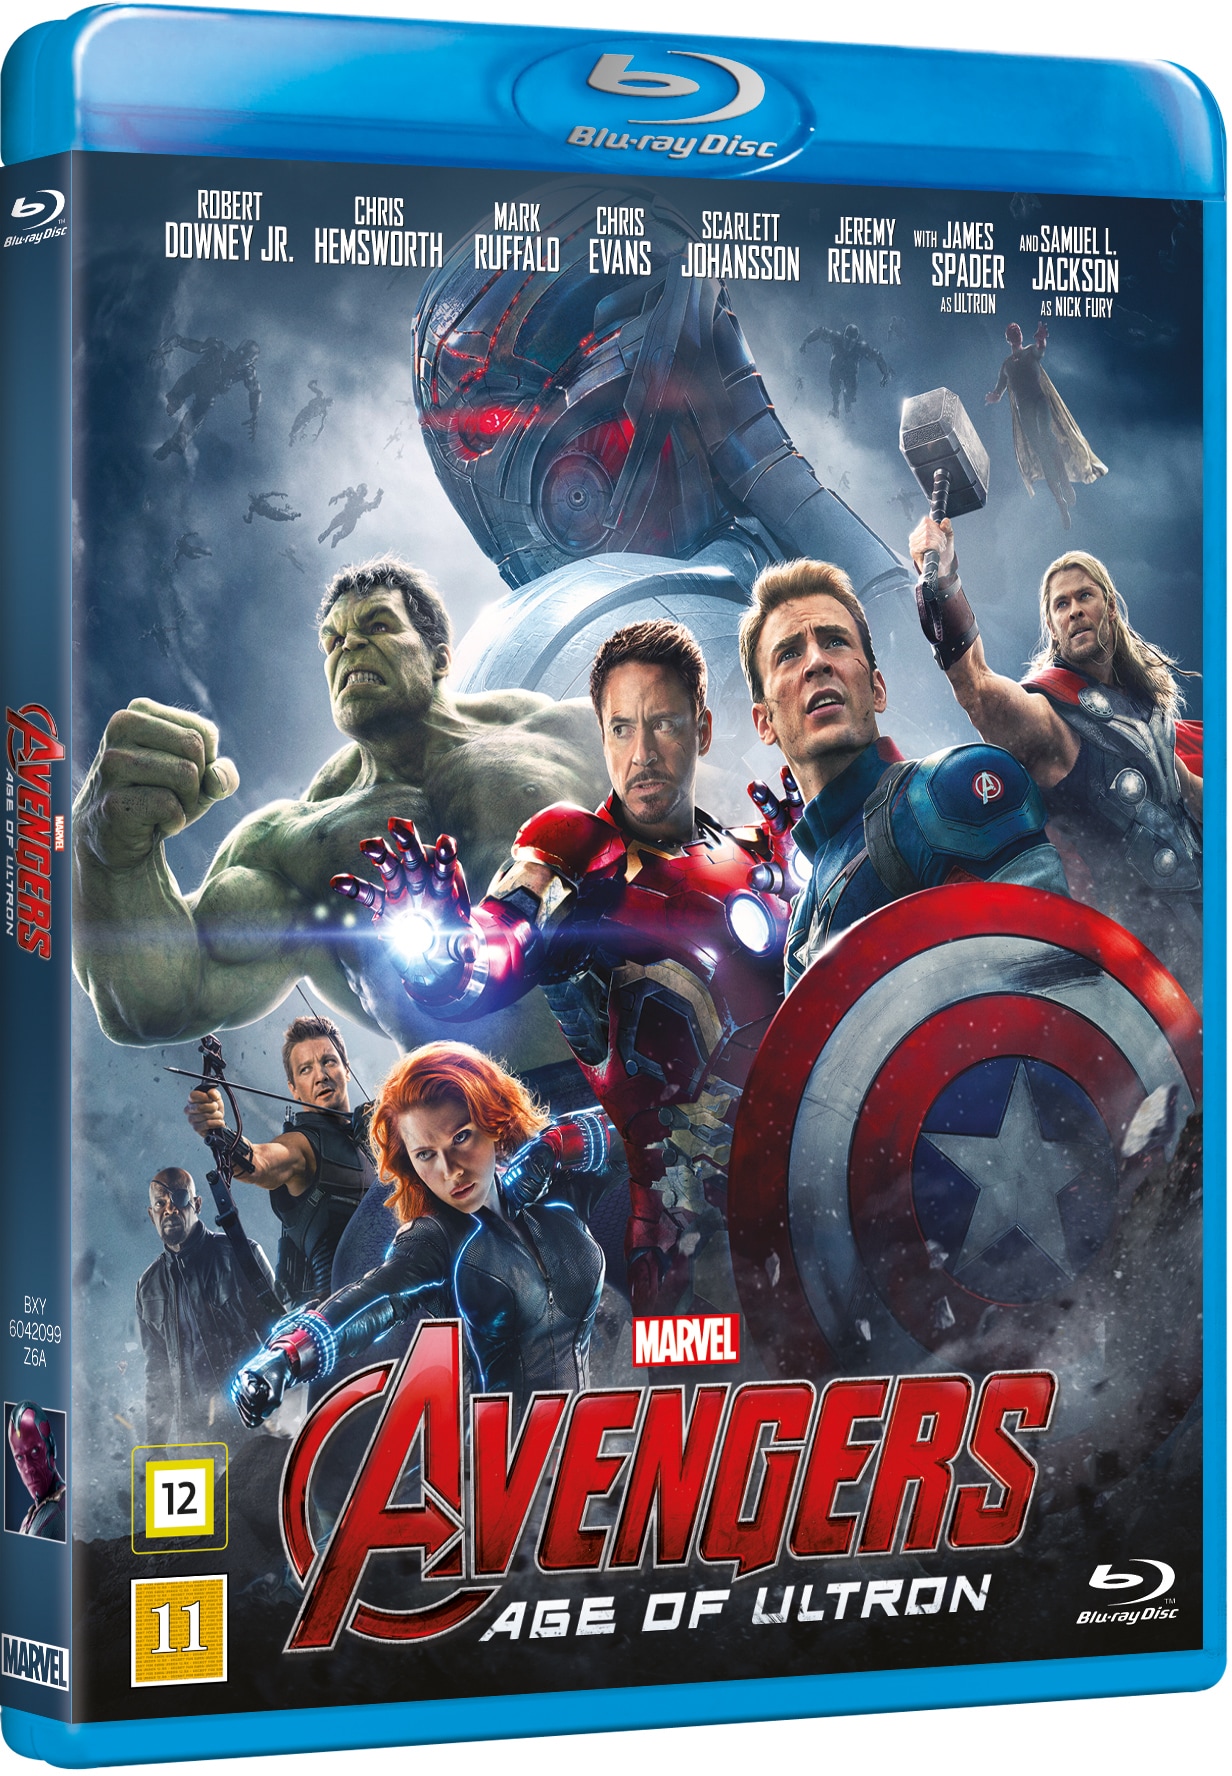 Avengers age of ultron (blu-ray)